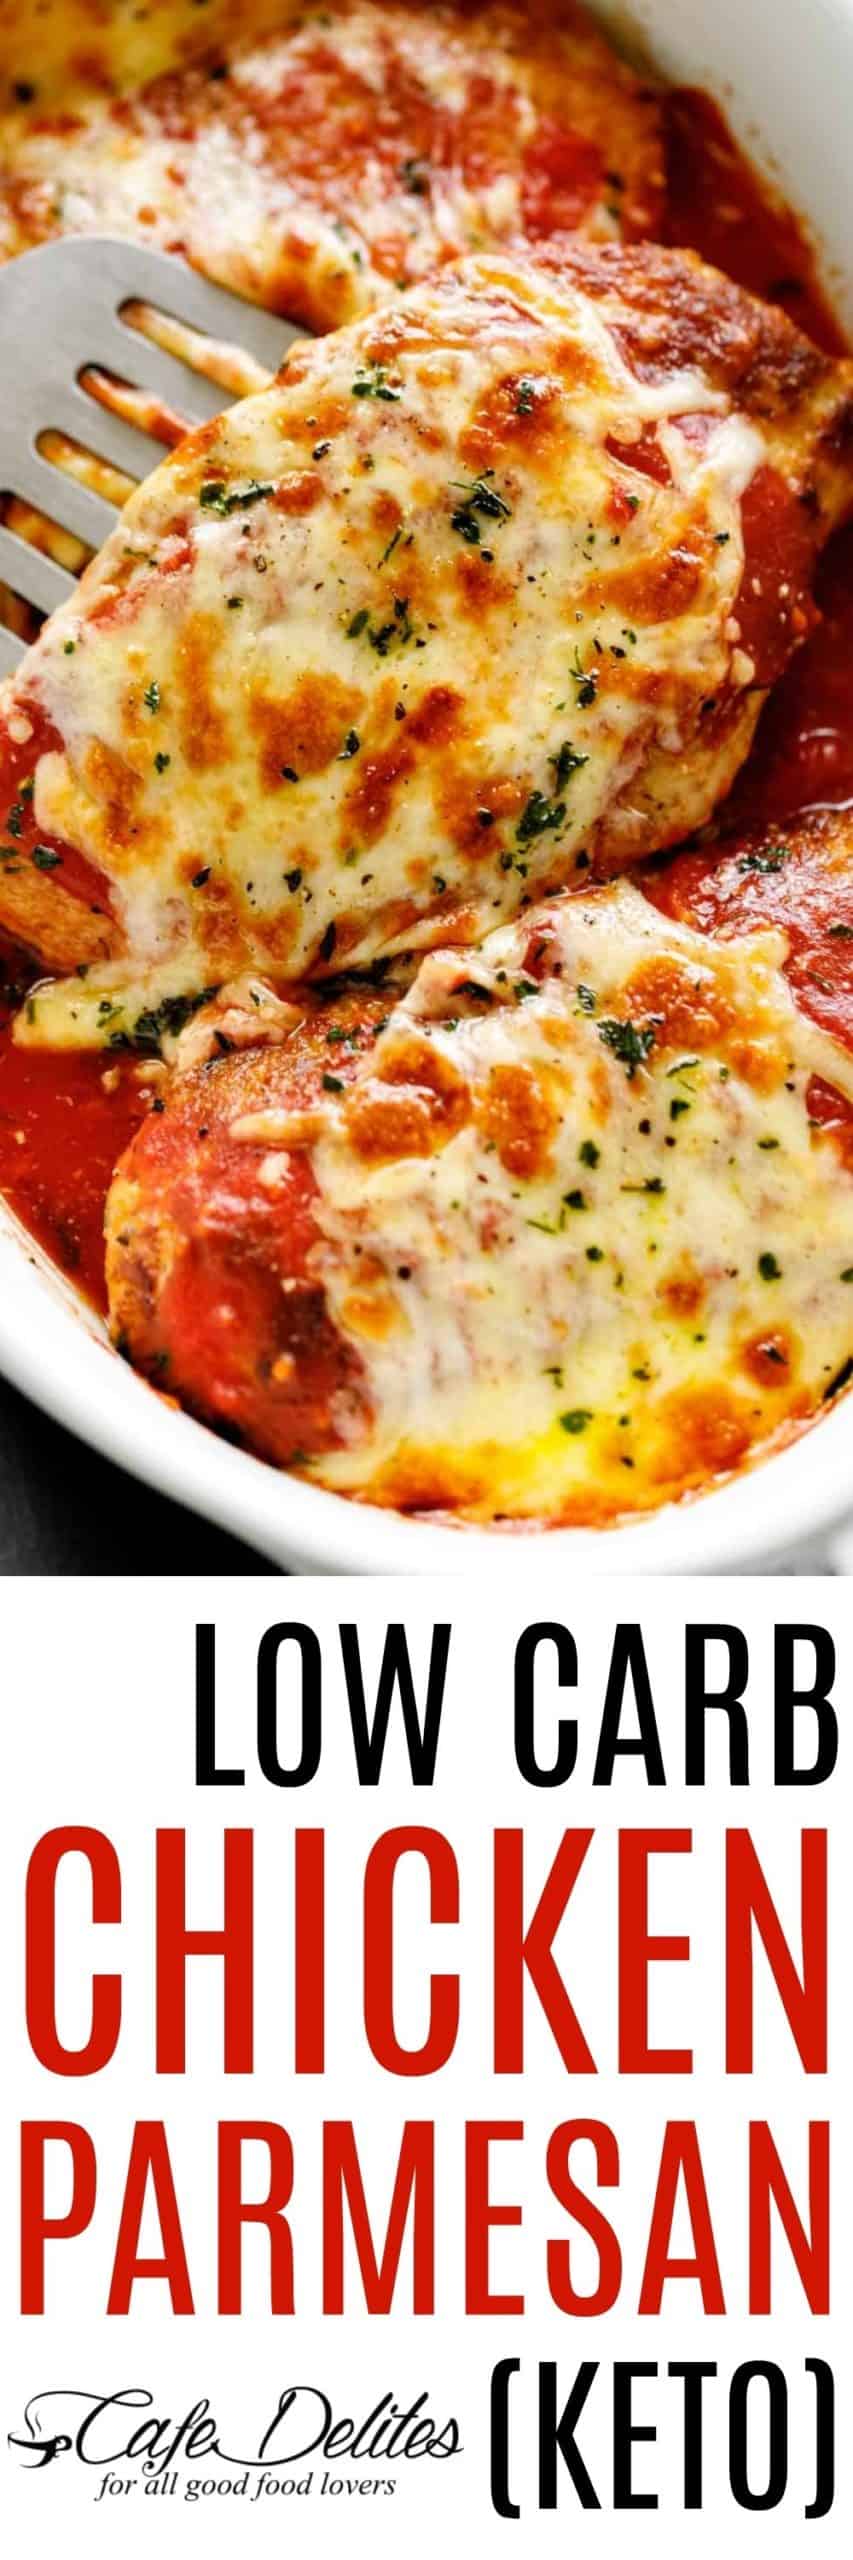 Low Carb Chicken Parmesan Recipe | cafedelites.com